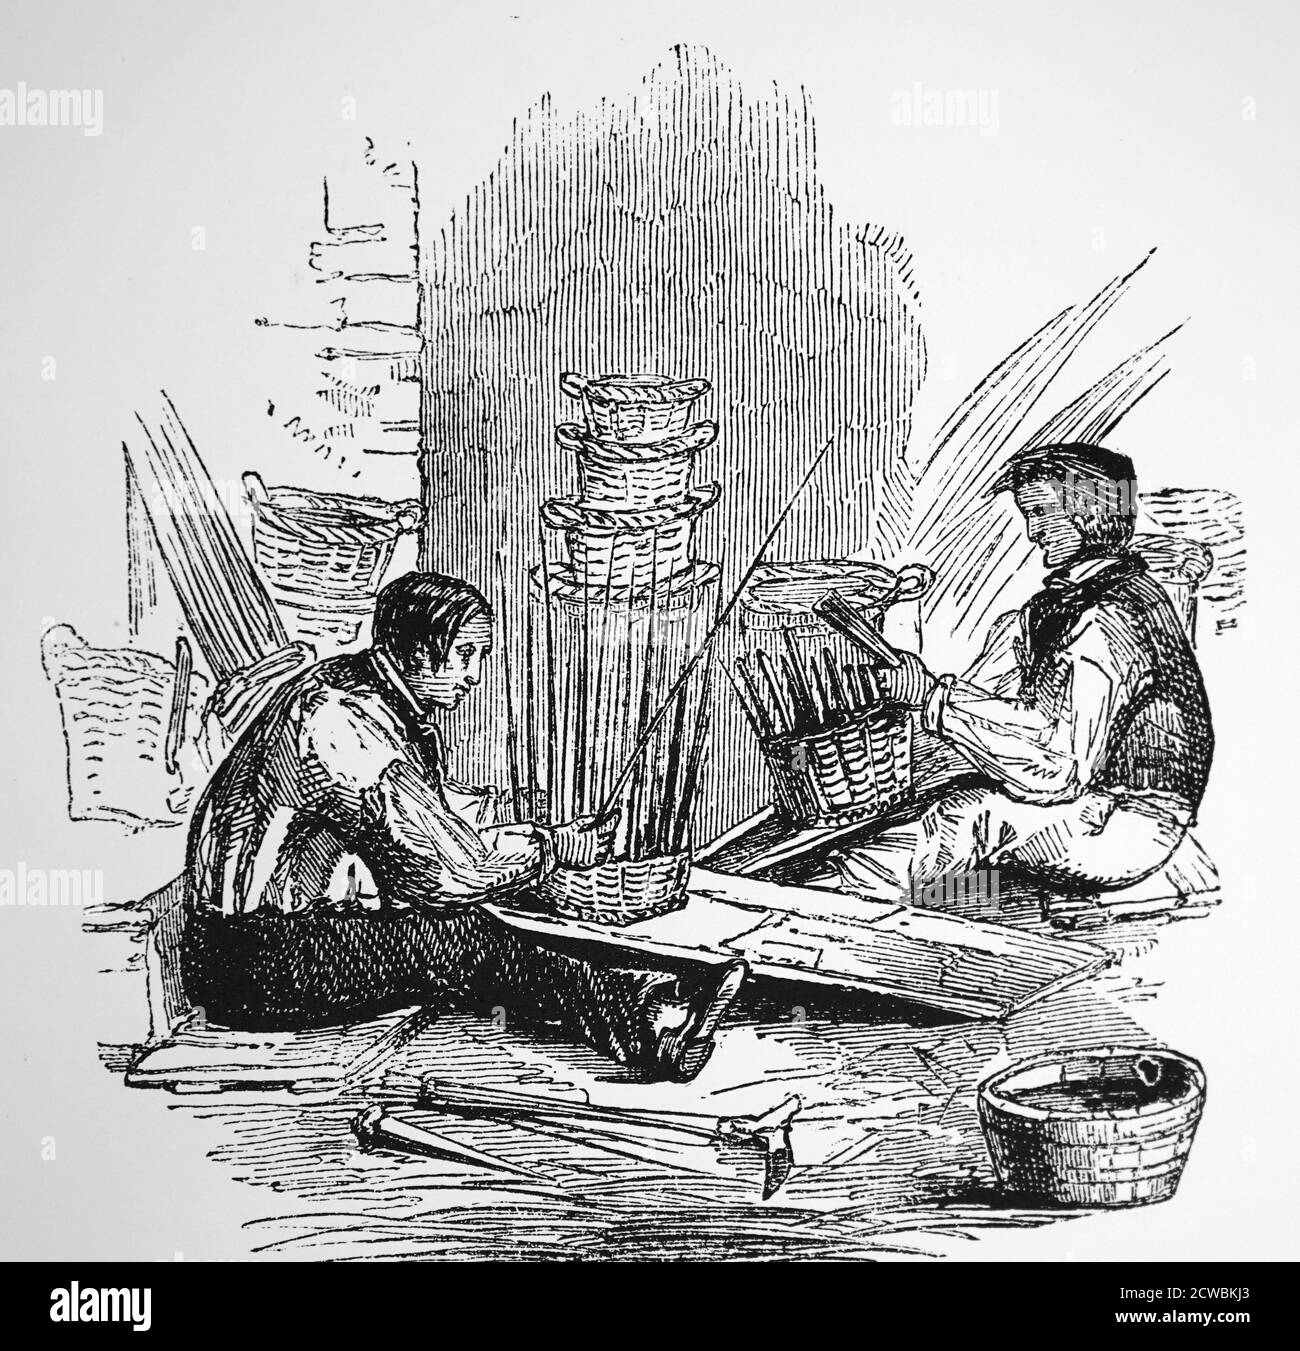 Engraving depicting basket makers weaving osiers. Stock Photo